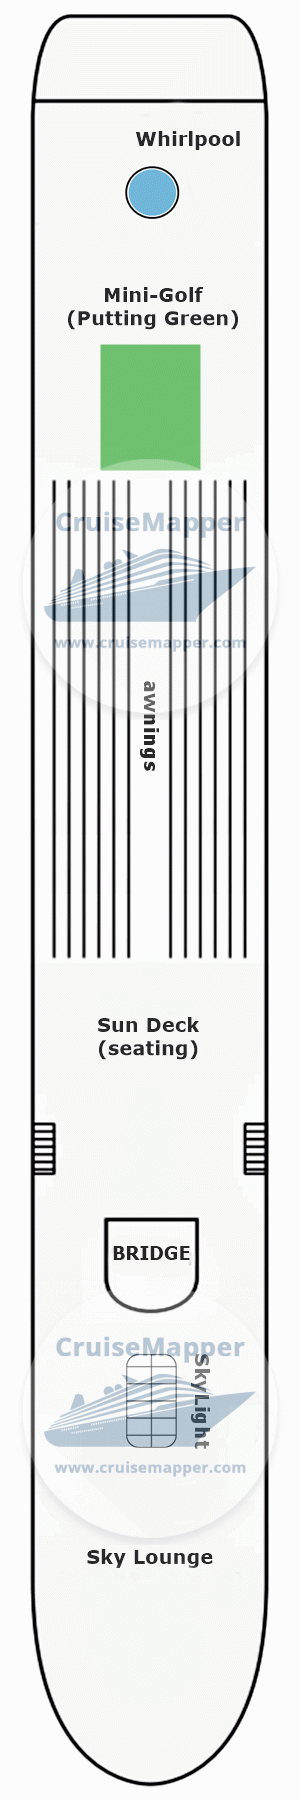 MS Excellence Princess Deck 04 - Sundeck-Pool